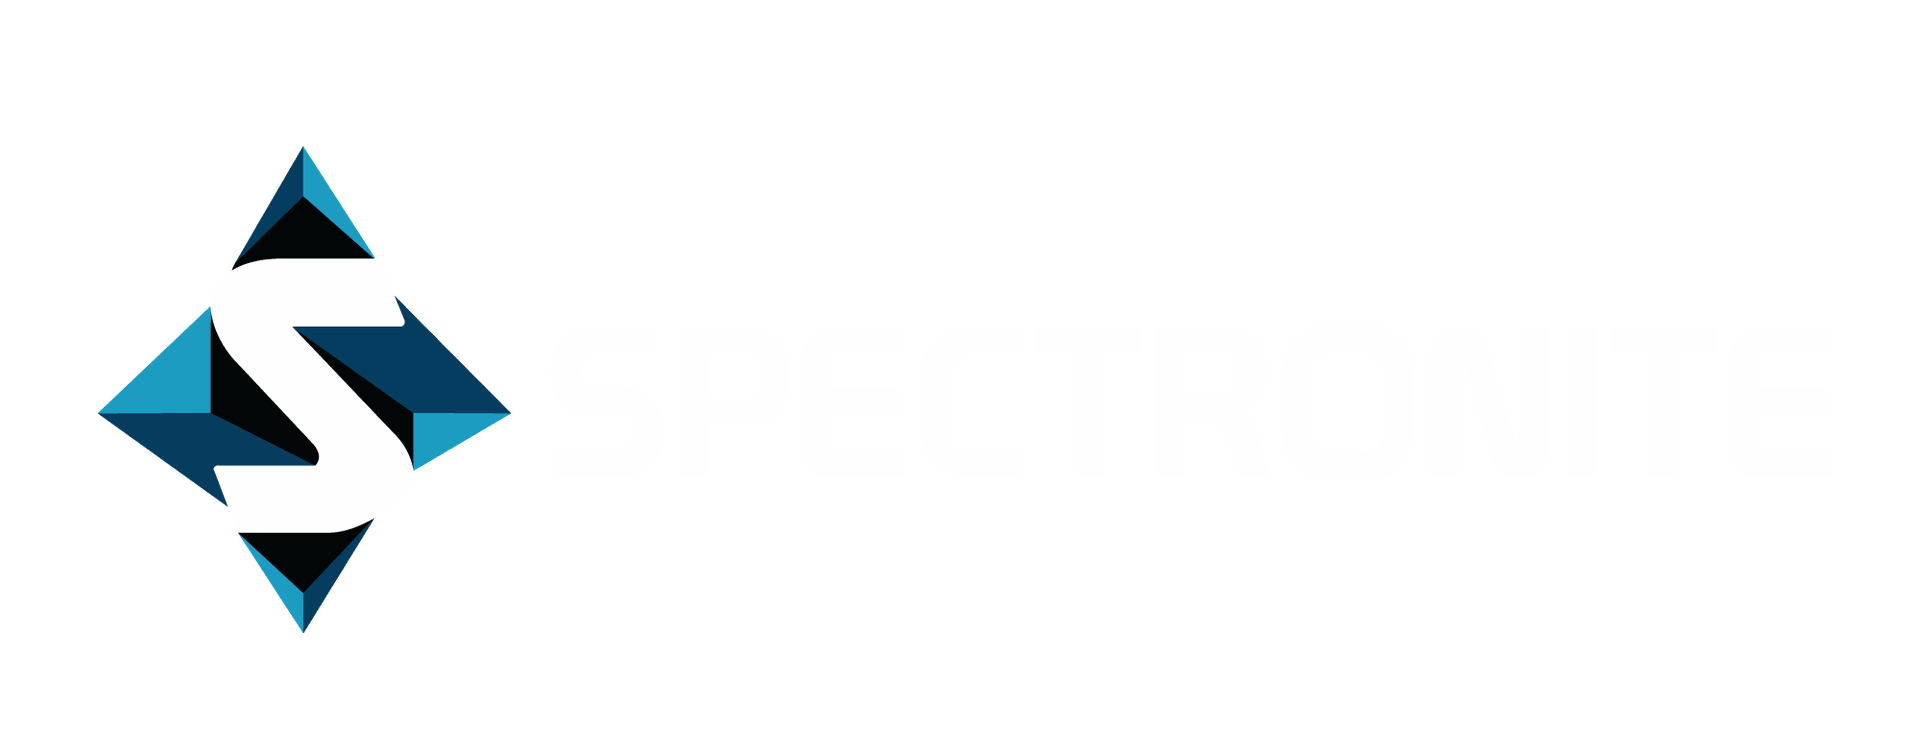 SPECTRONITE Website